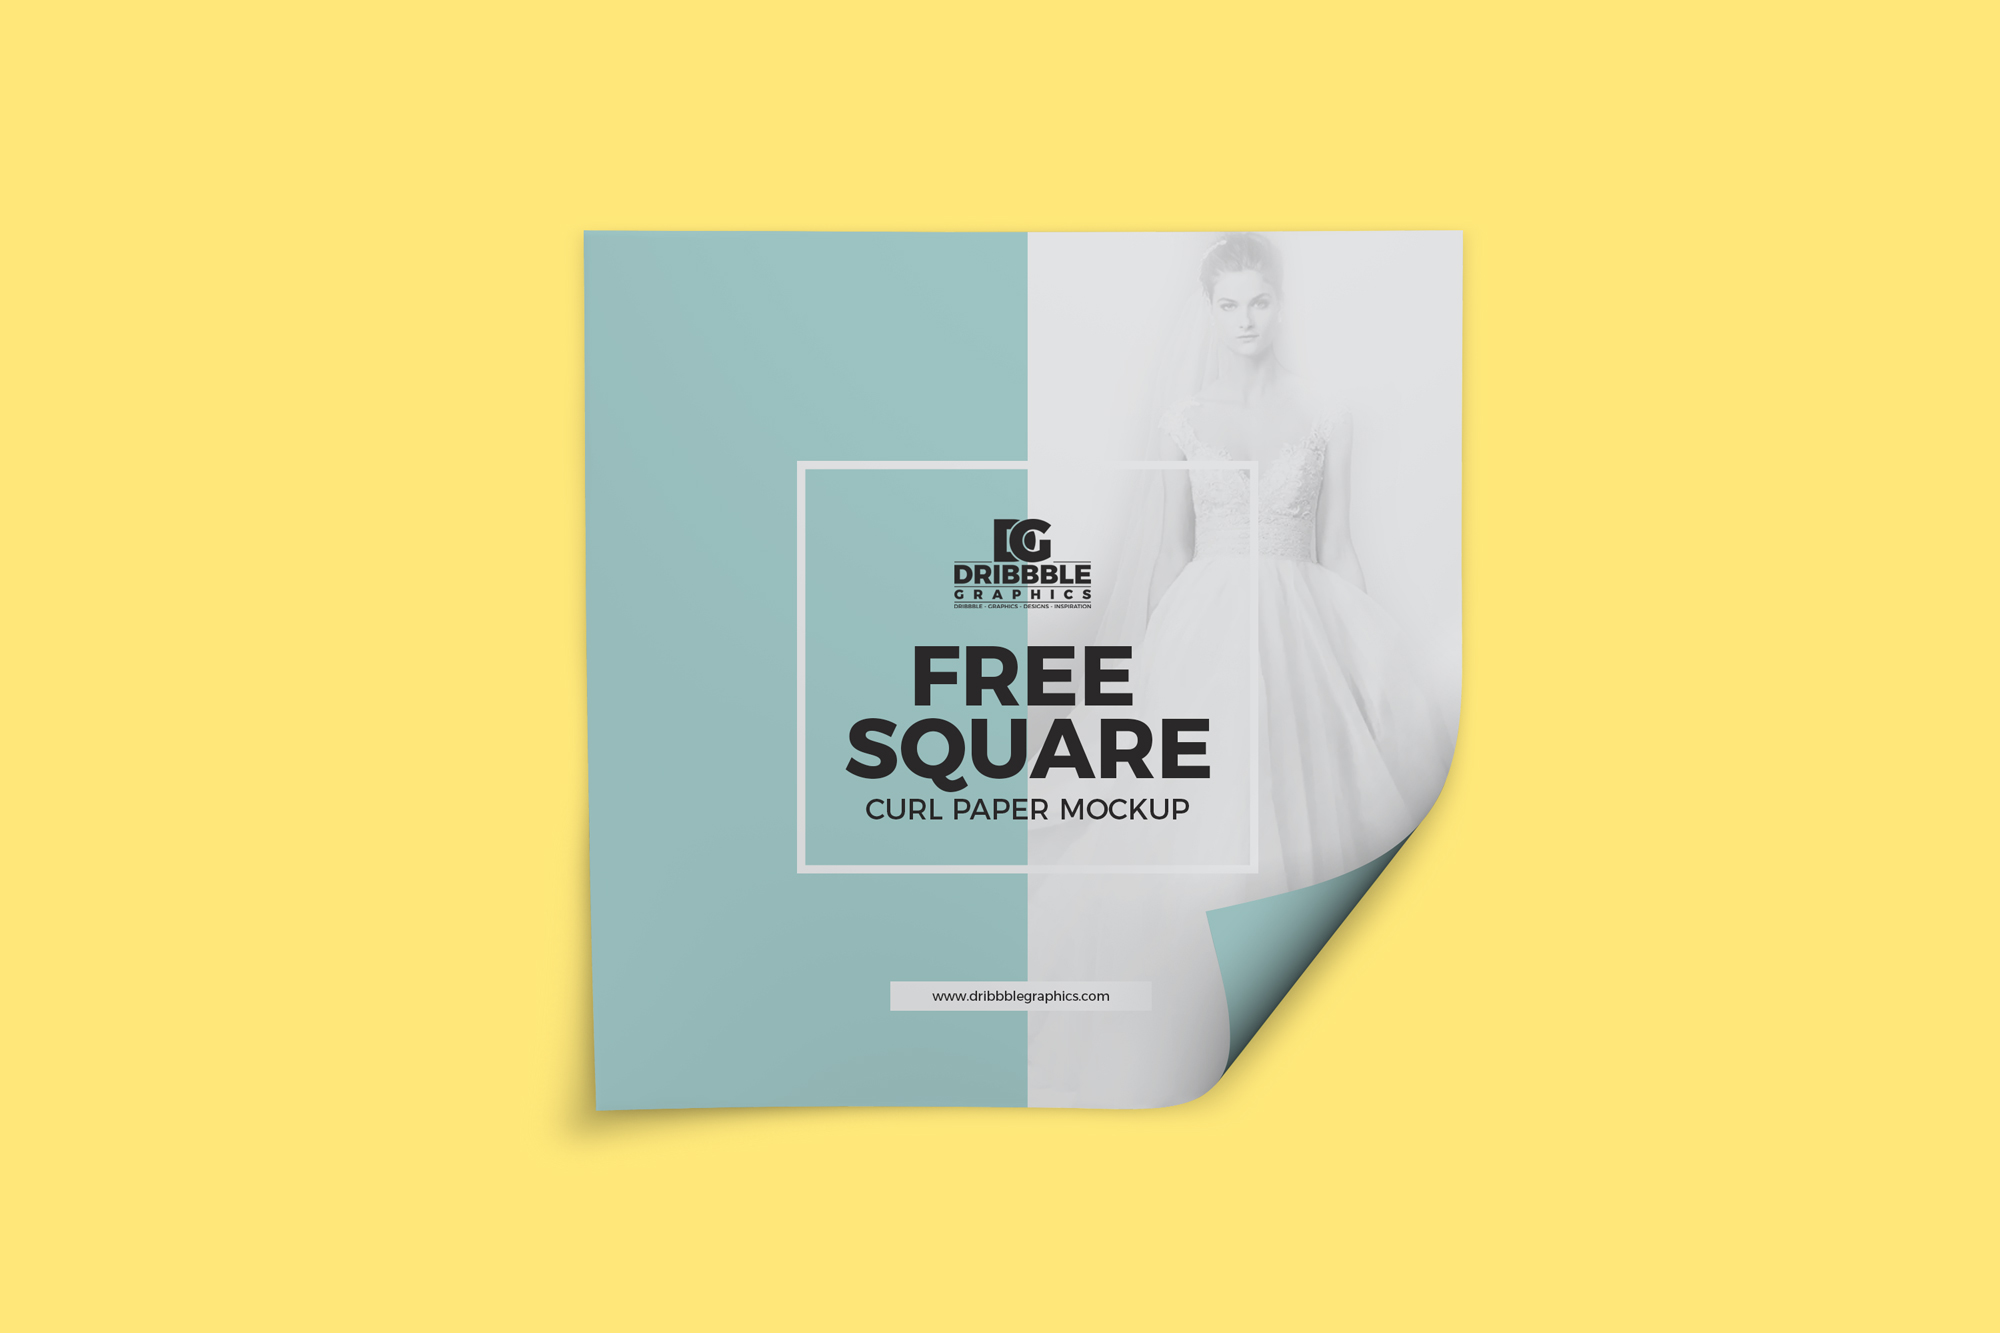 Free-Square-Curl-Paper-Mockup-600